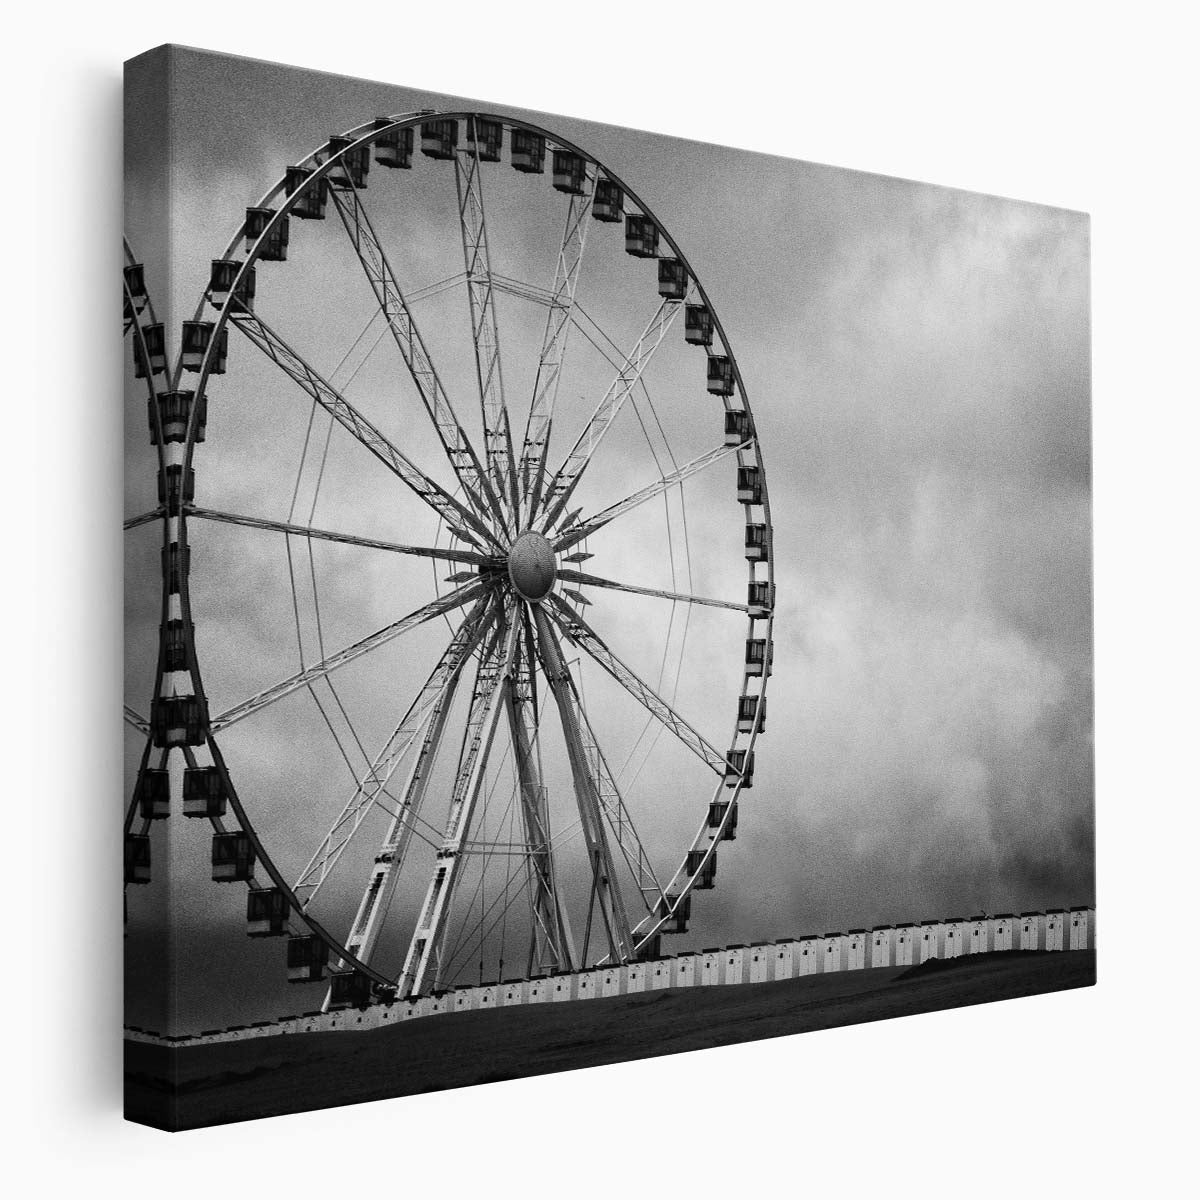 Monochrome Ferris Wheel Coastal Landscape Wall Art by Luxuriance Designs. Made in USA.